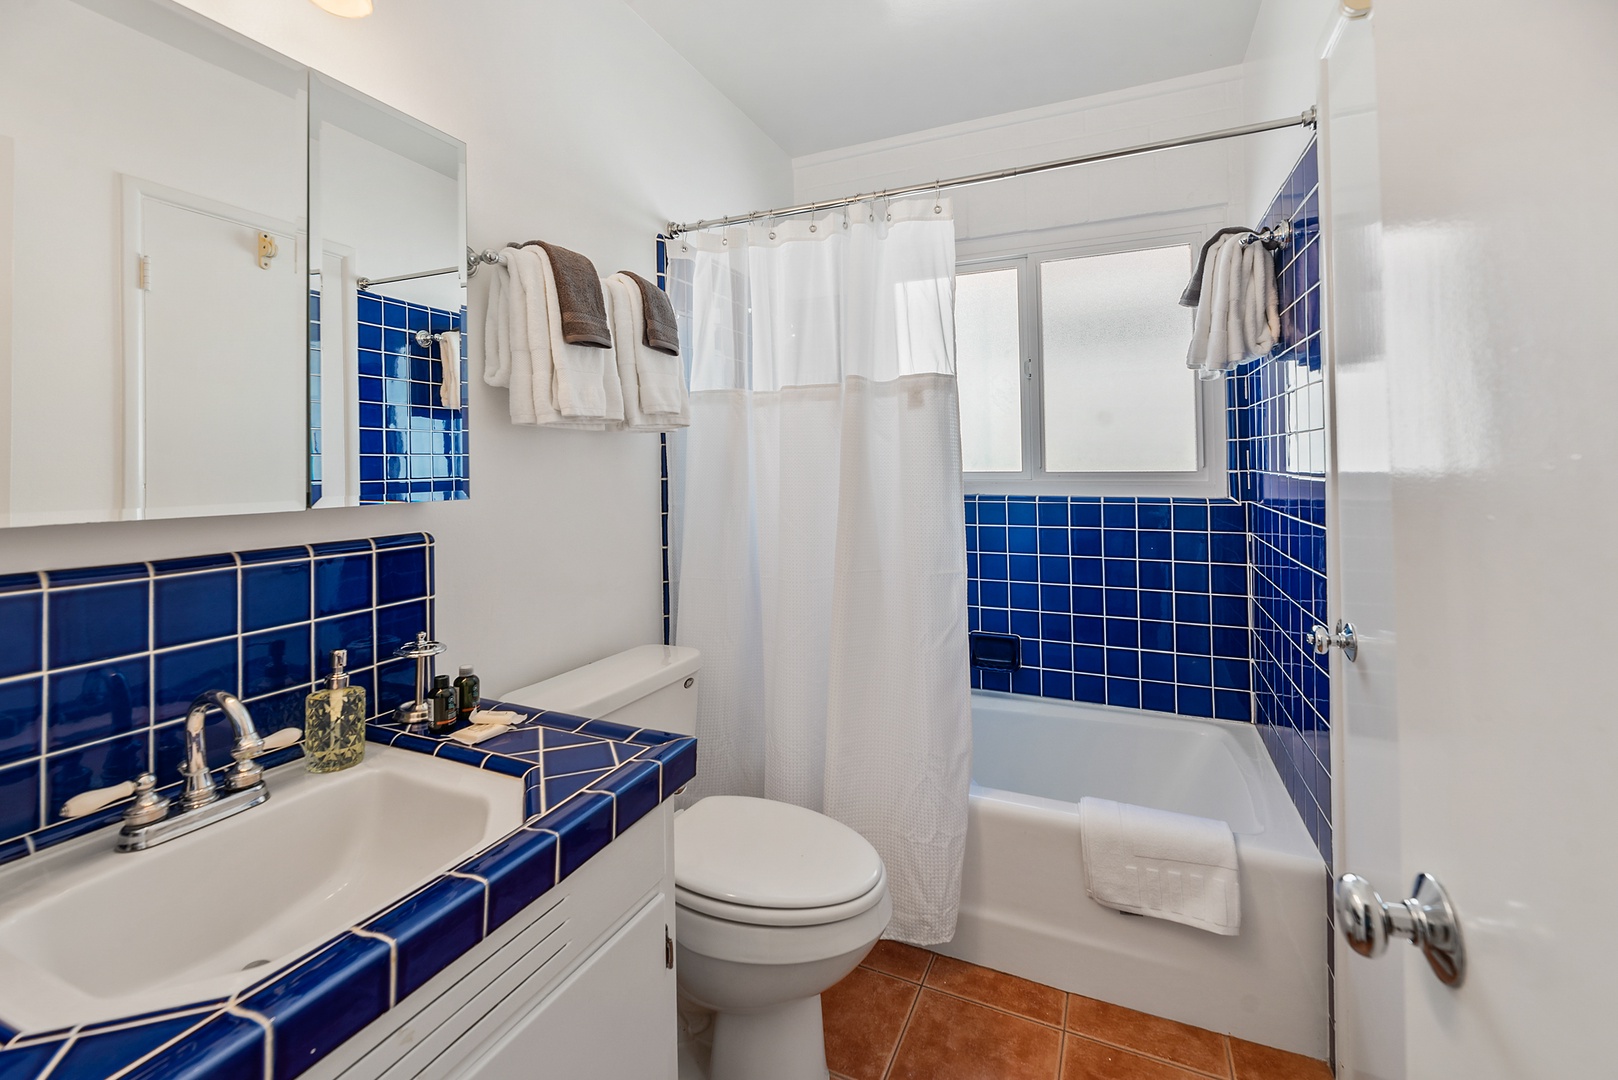 La Jolla Vacation Rentals, Hemingway's Beach House - Primary bathroom with tub